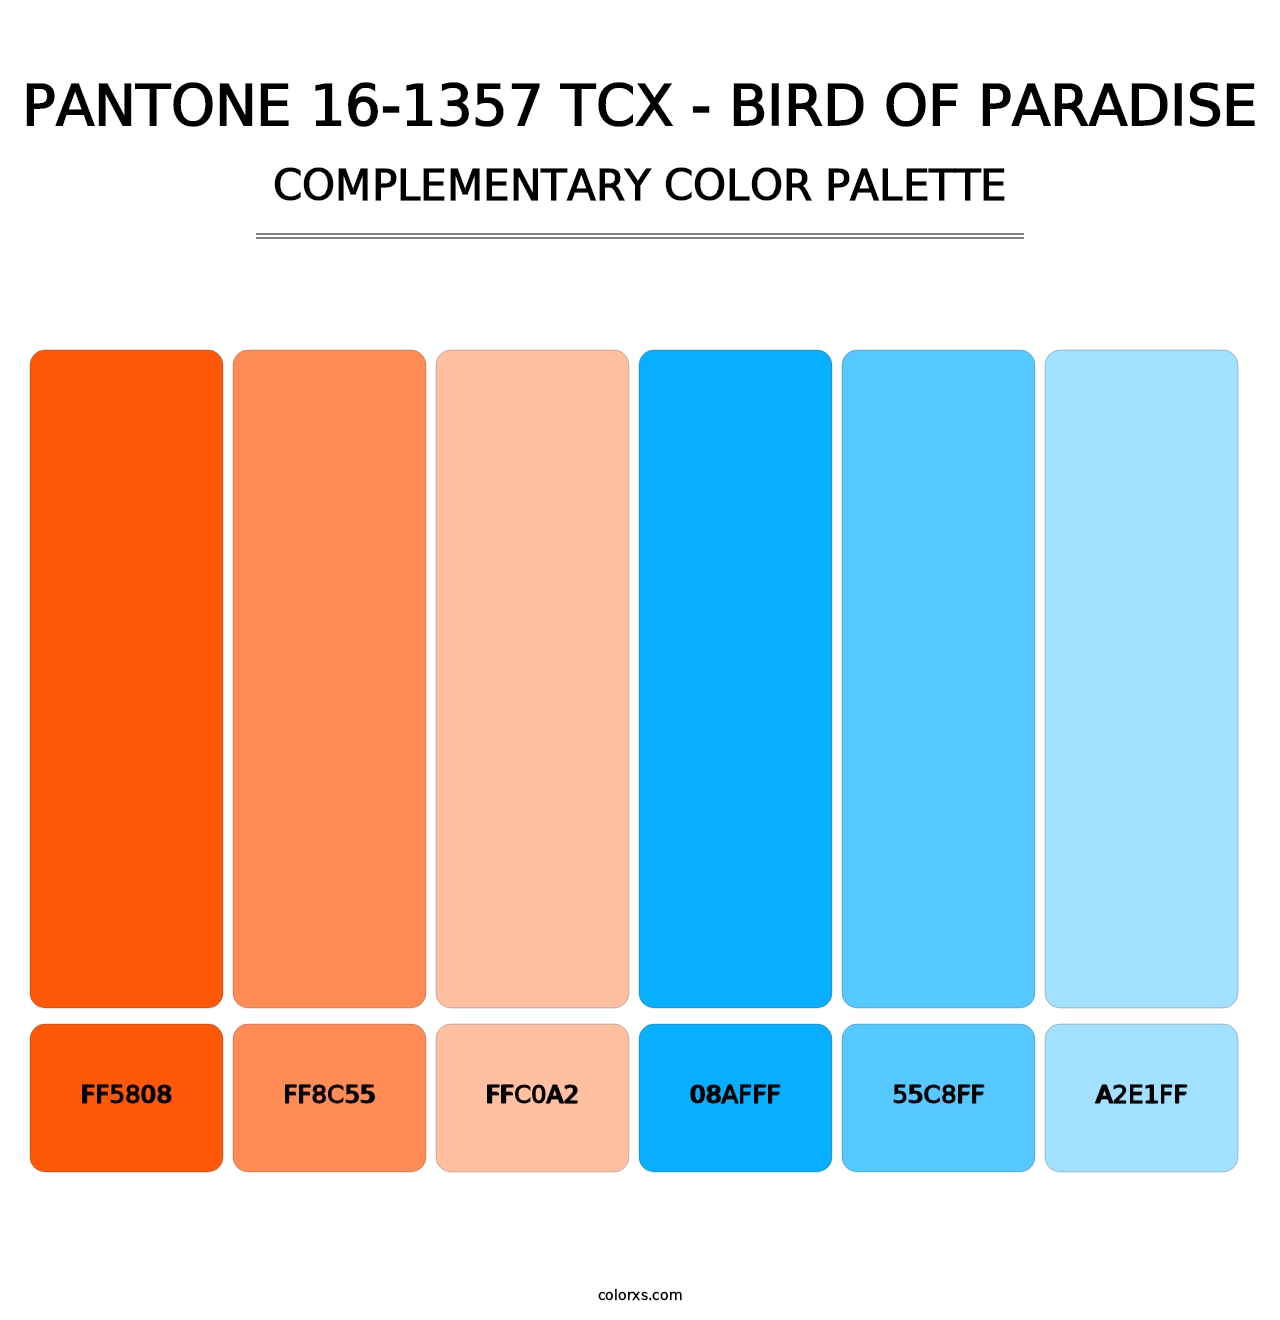 PANTONE 16-1357 TCX - Bird of Paradise - Complementary Color Palette